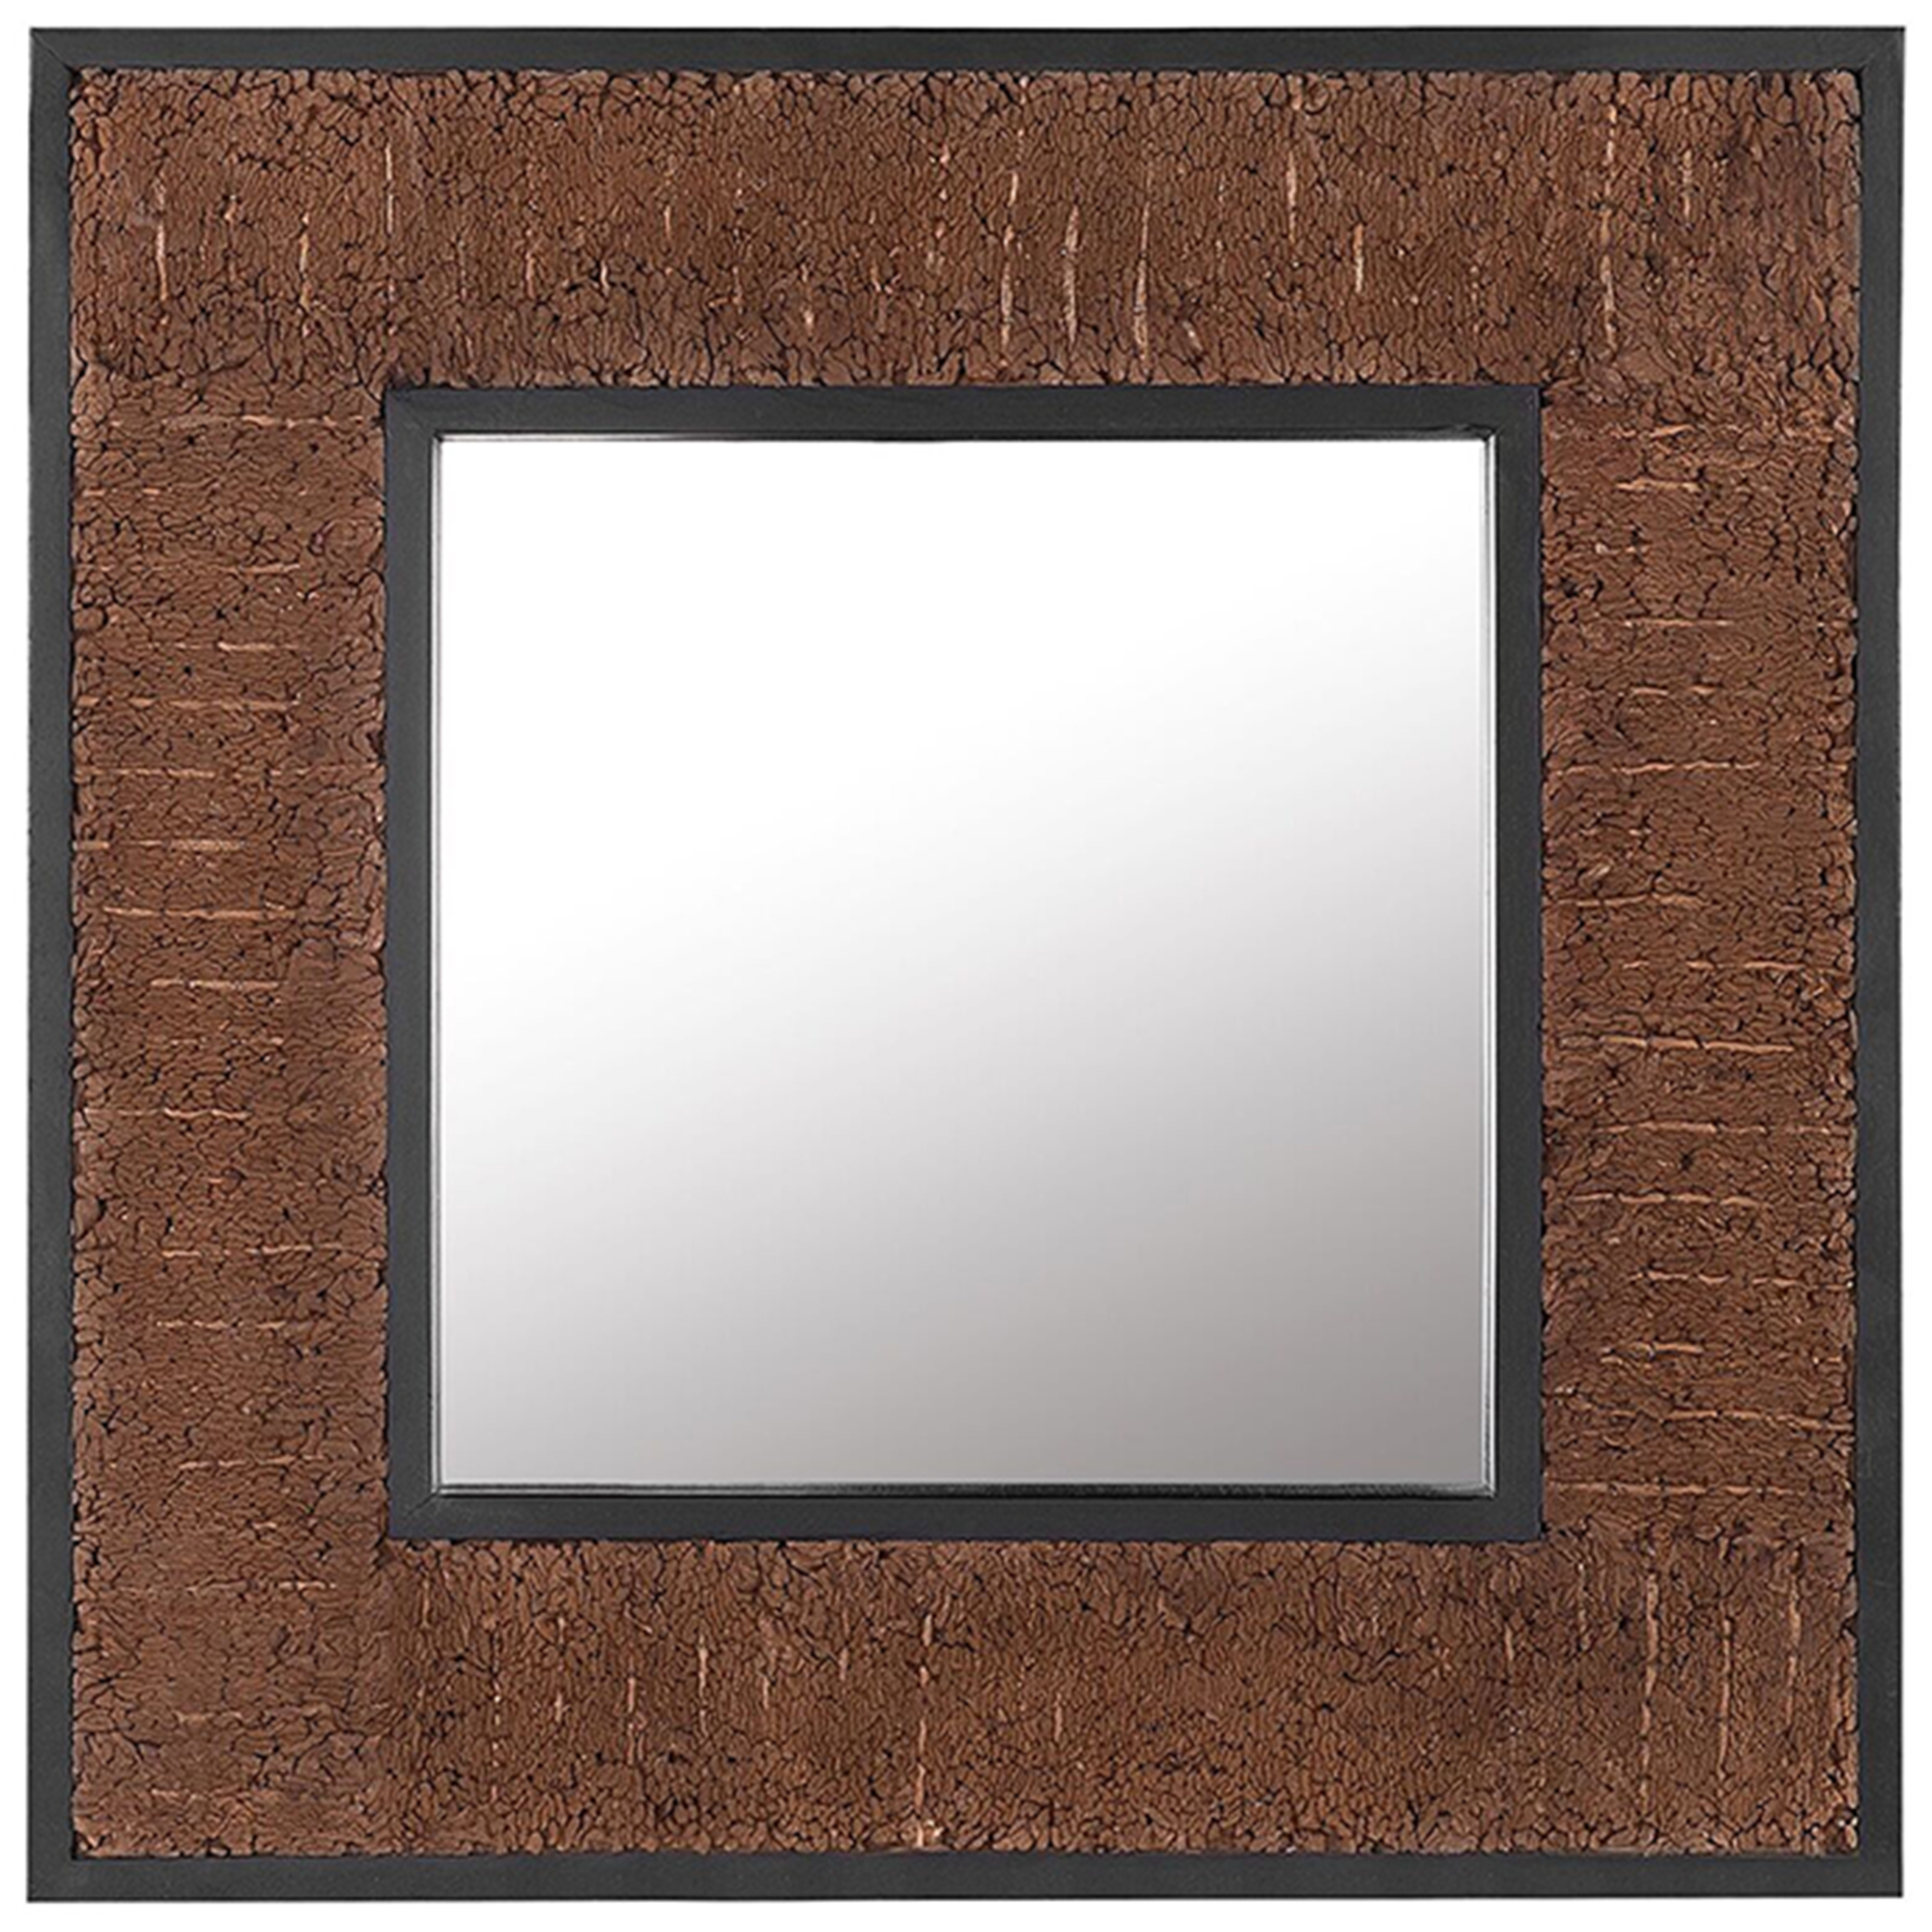 Beliani Decorative Wall Mirror Dark Wood Teak 60 x 60 cm Rustic Style